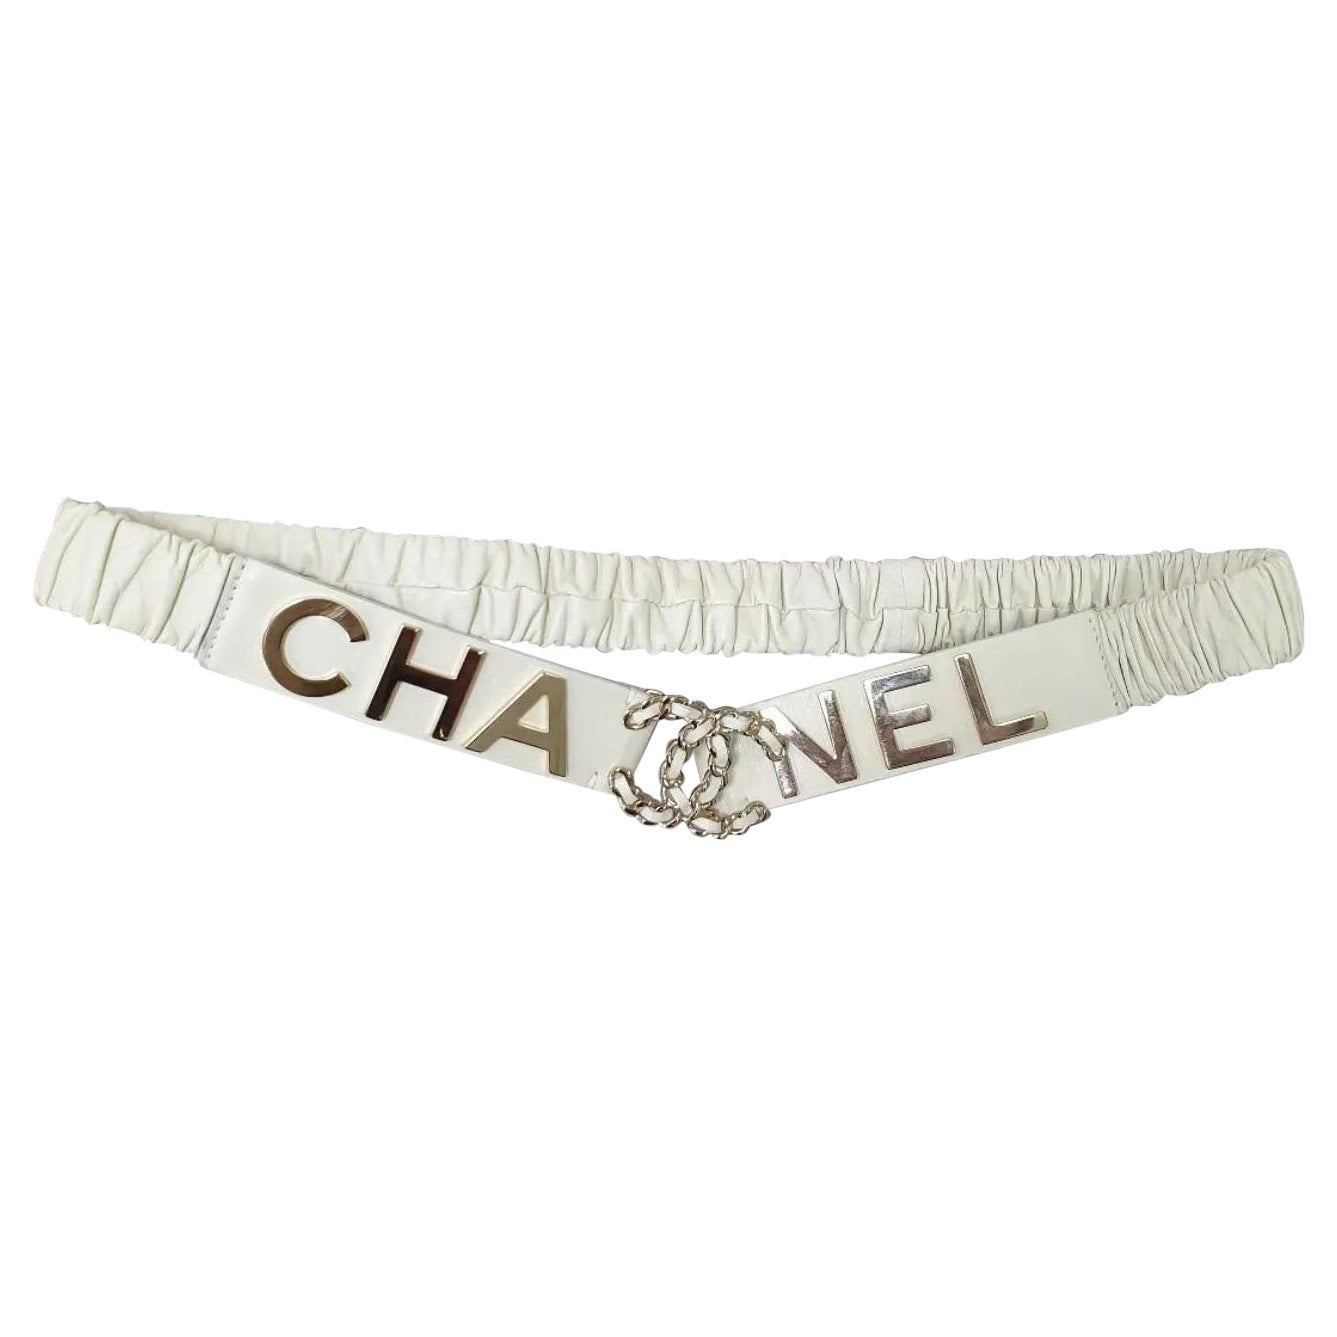 Chanel Weißer geraffter Ledergürtel